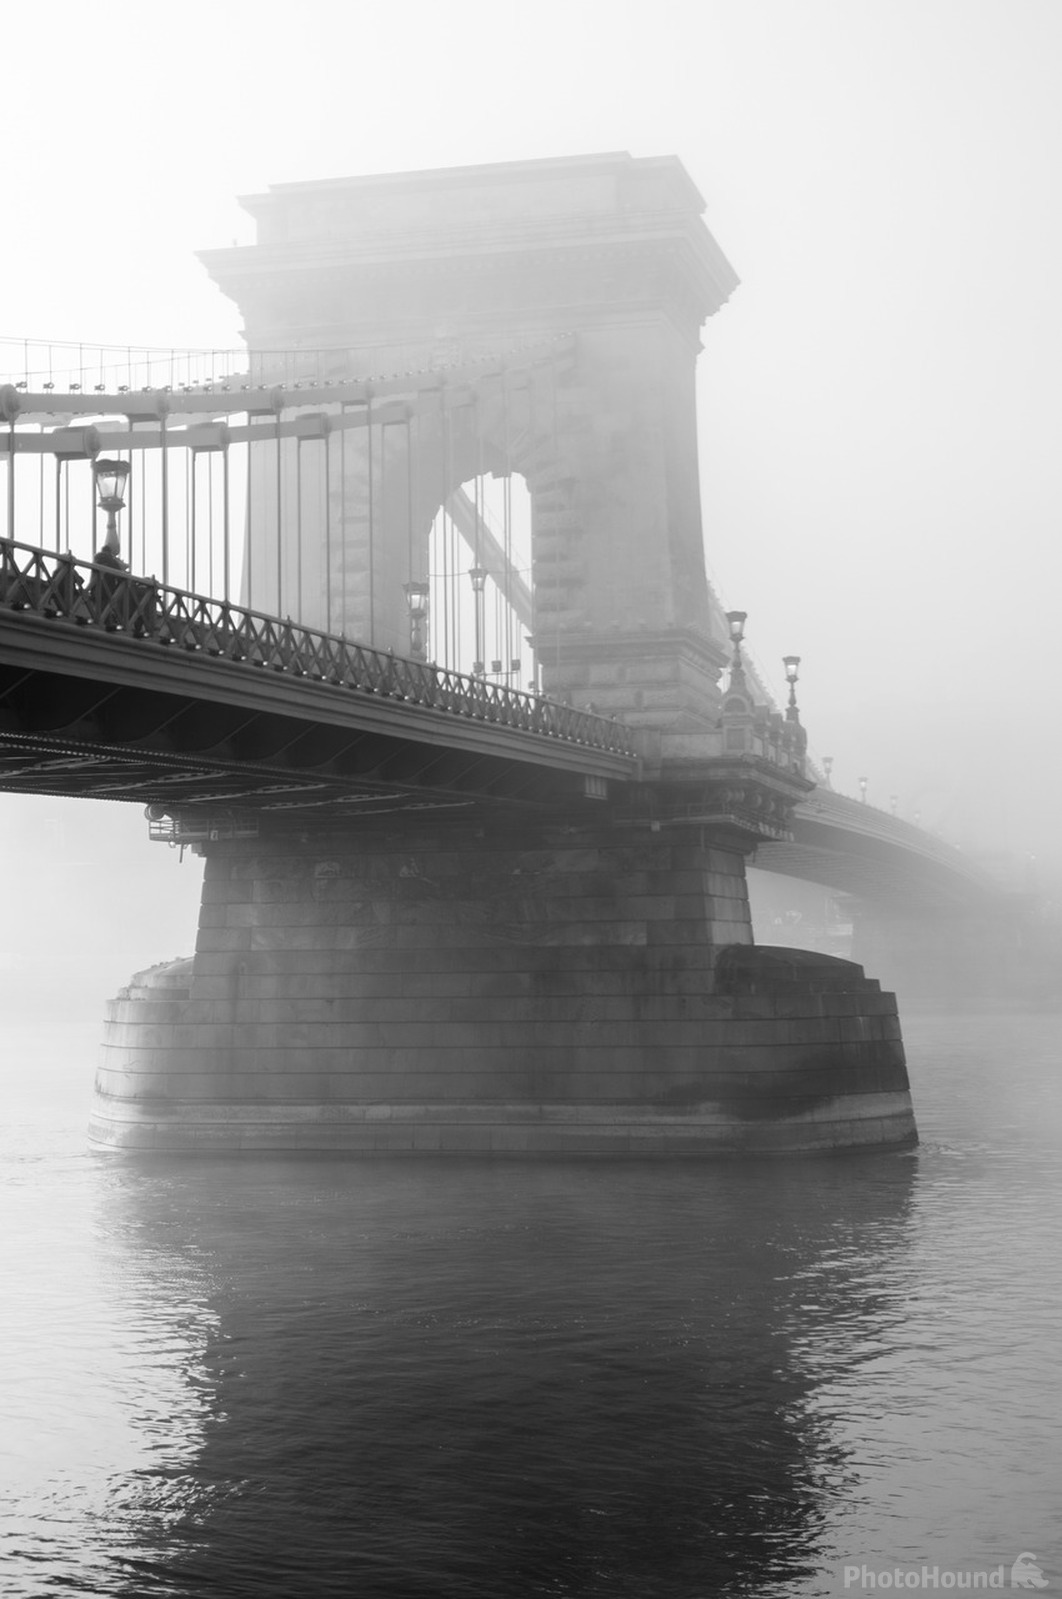 Image of Chain Bridge - Danube Viewpoint by Team PhotoHound